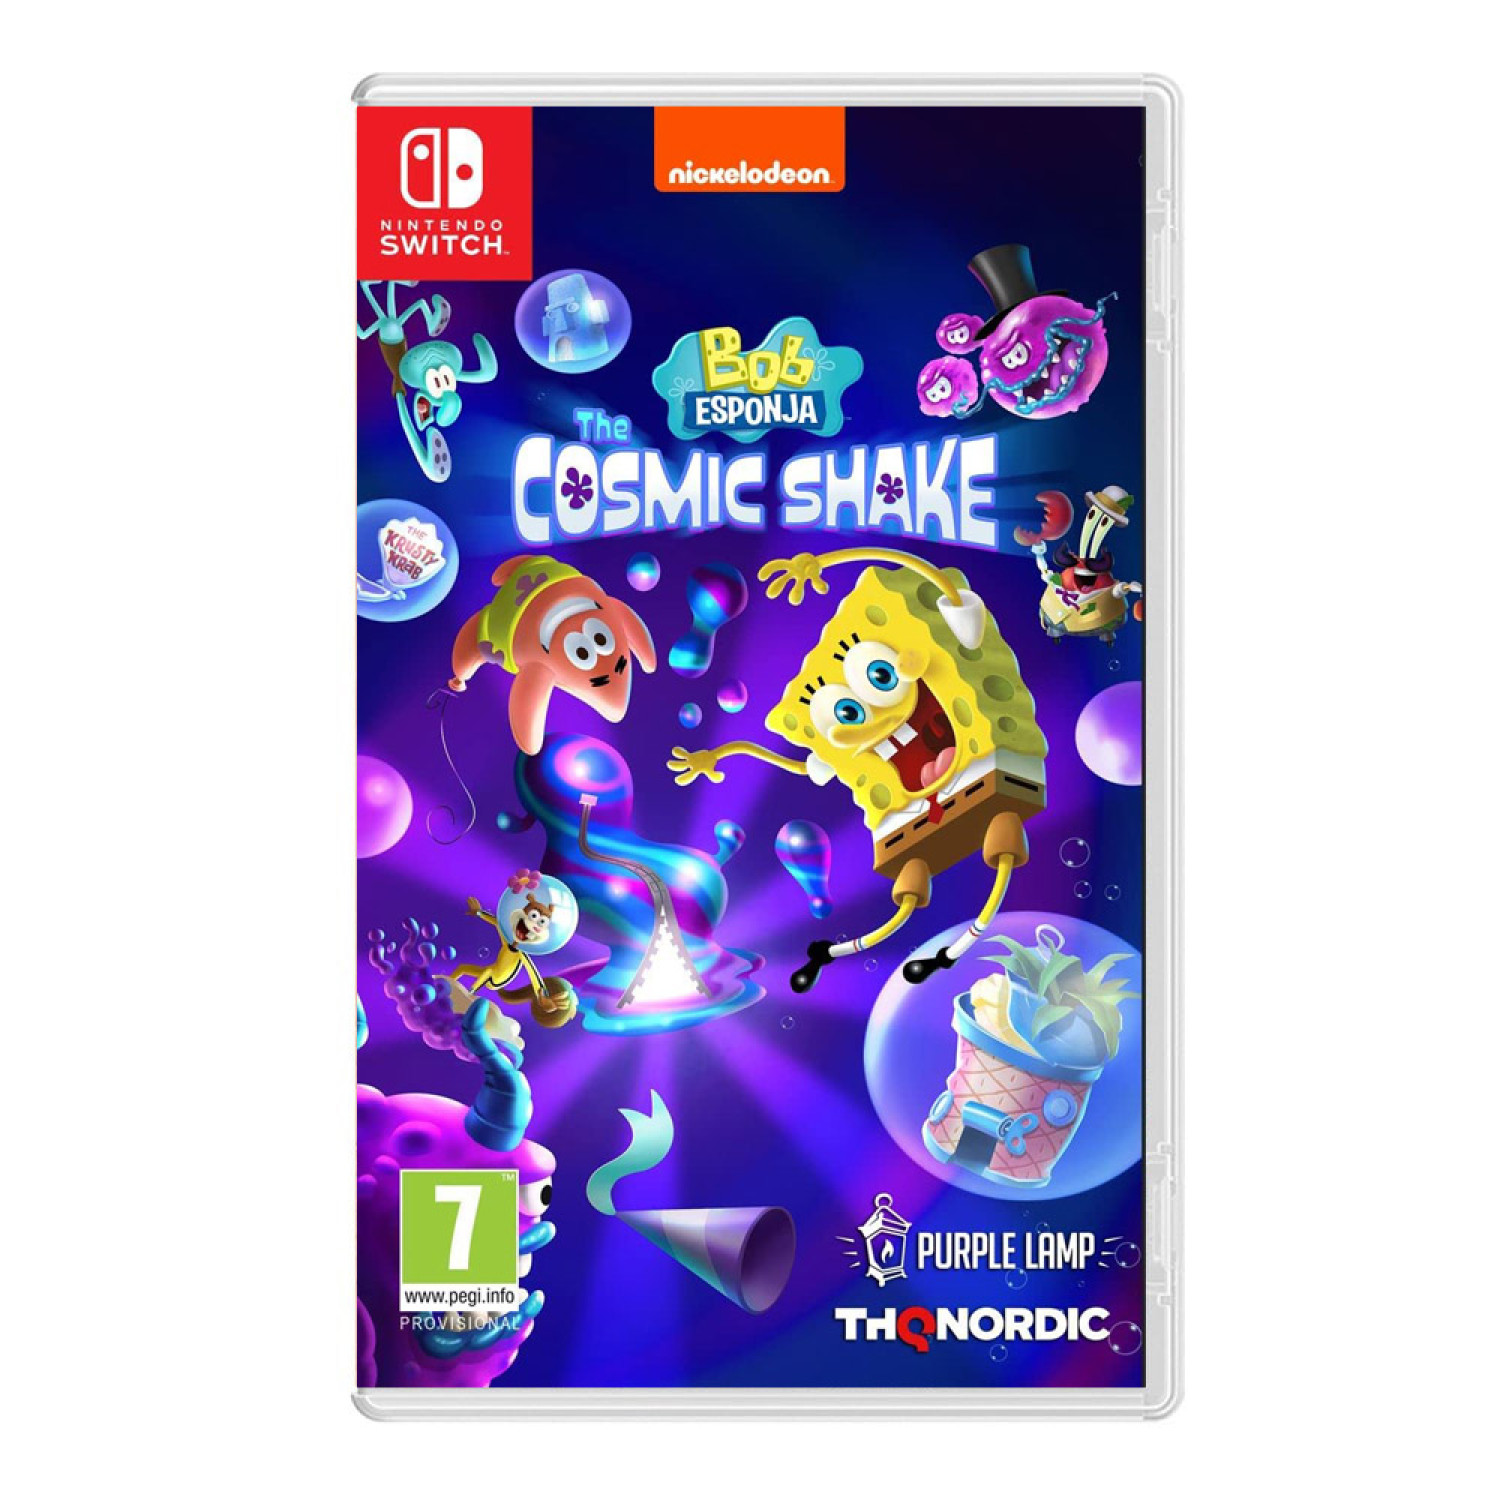 Ø¨Ø§Ø²ÛŒ SpongeBob SquarePants: The Cosmic Shake - Nintendo Switch